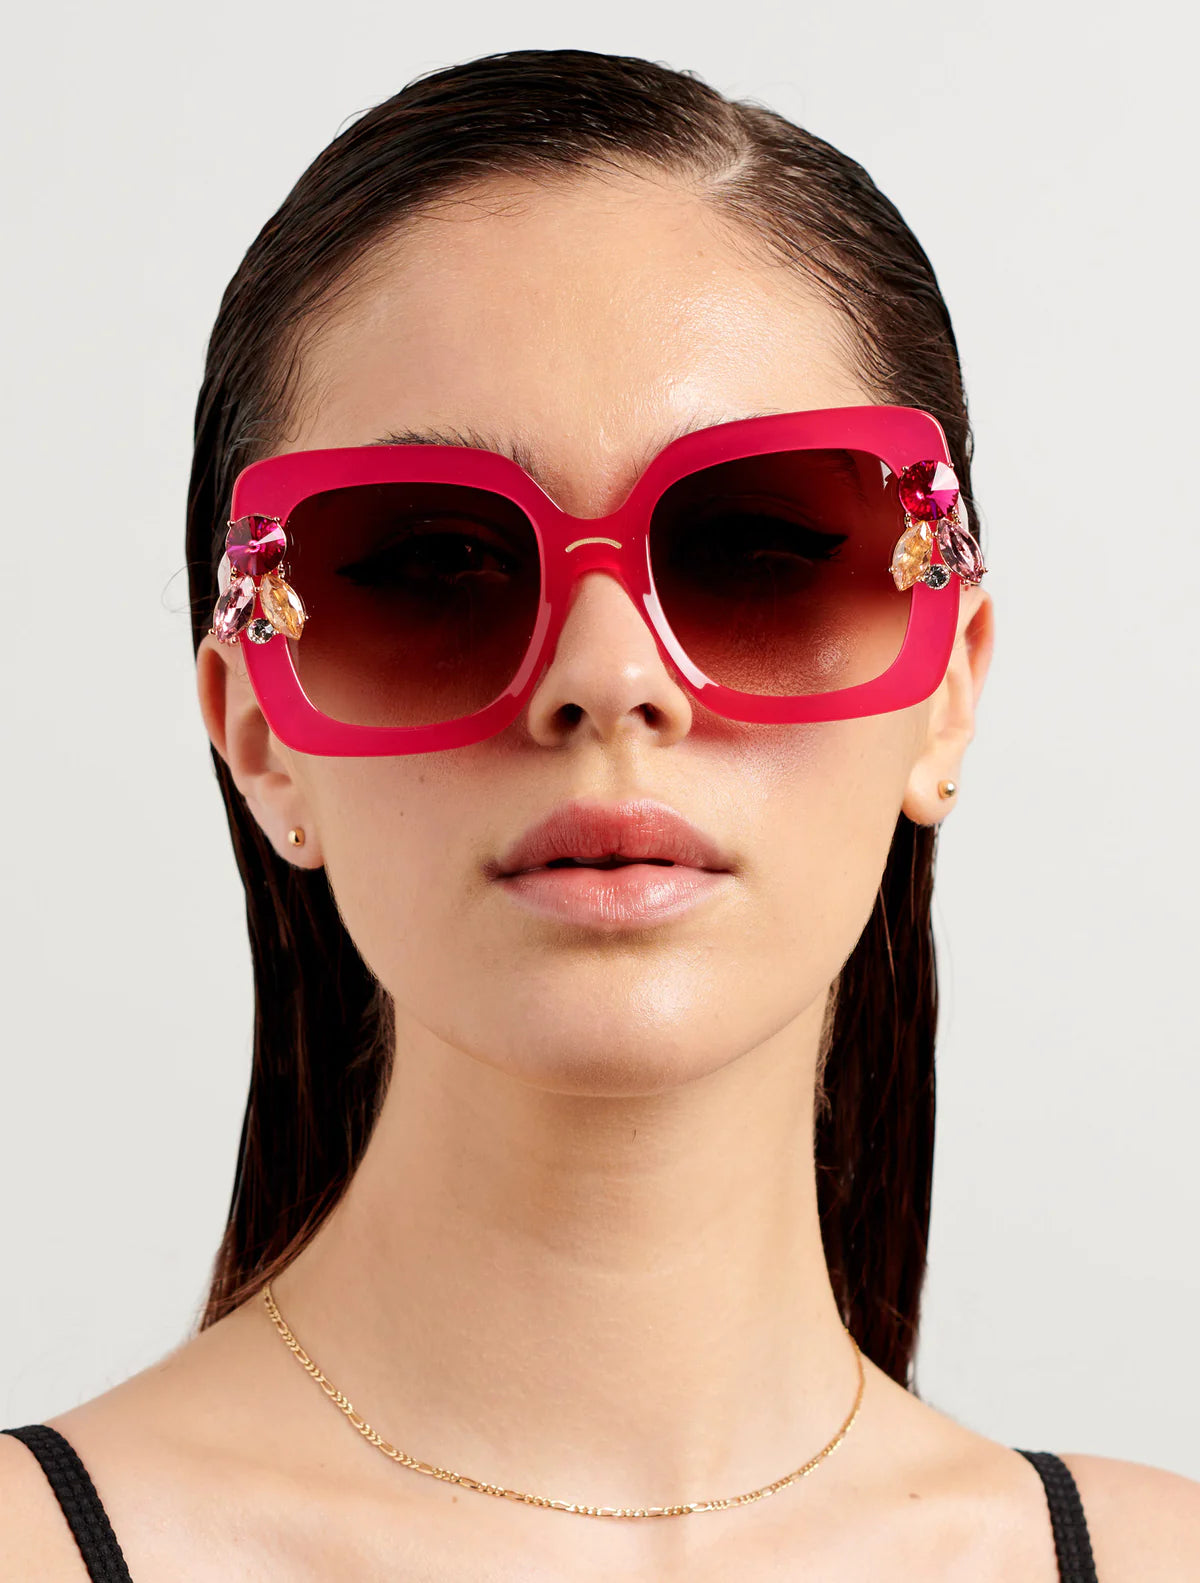 Coralline Sunglasses